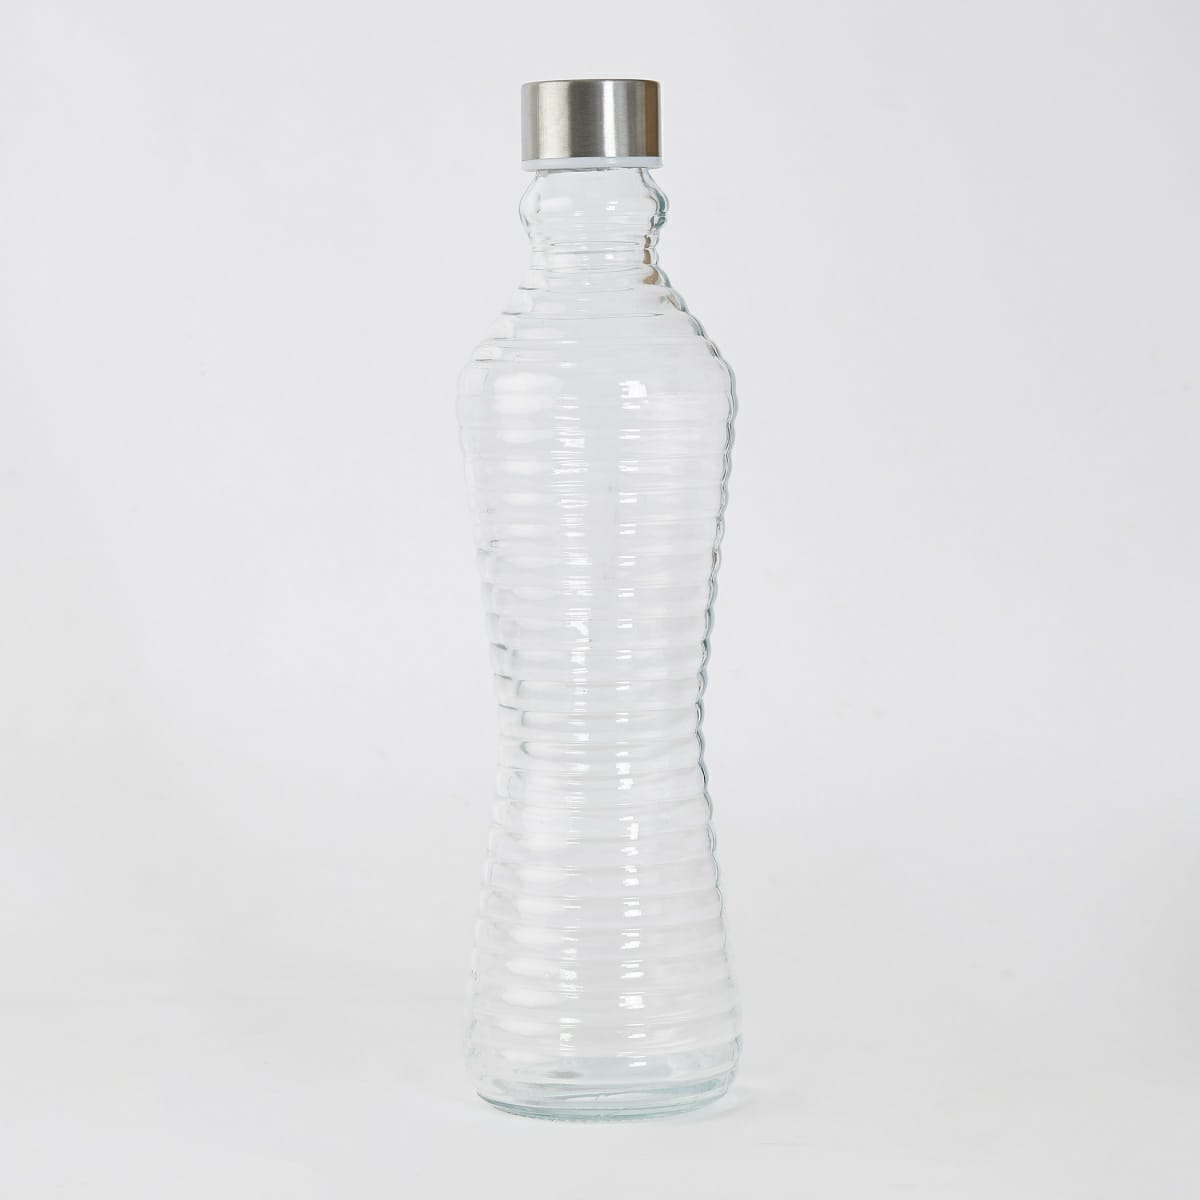 Textured Glass Bottle